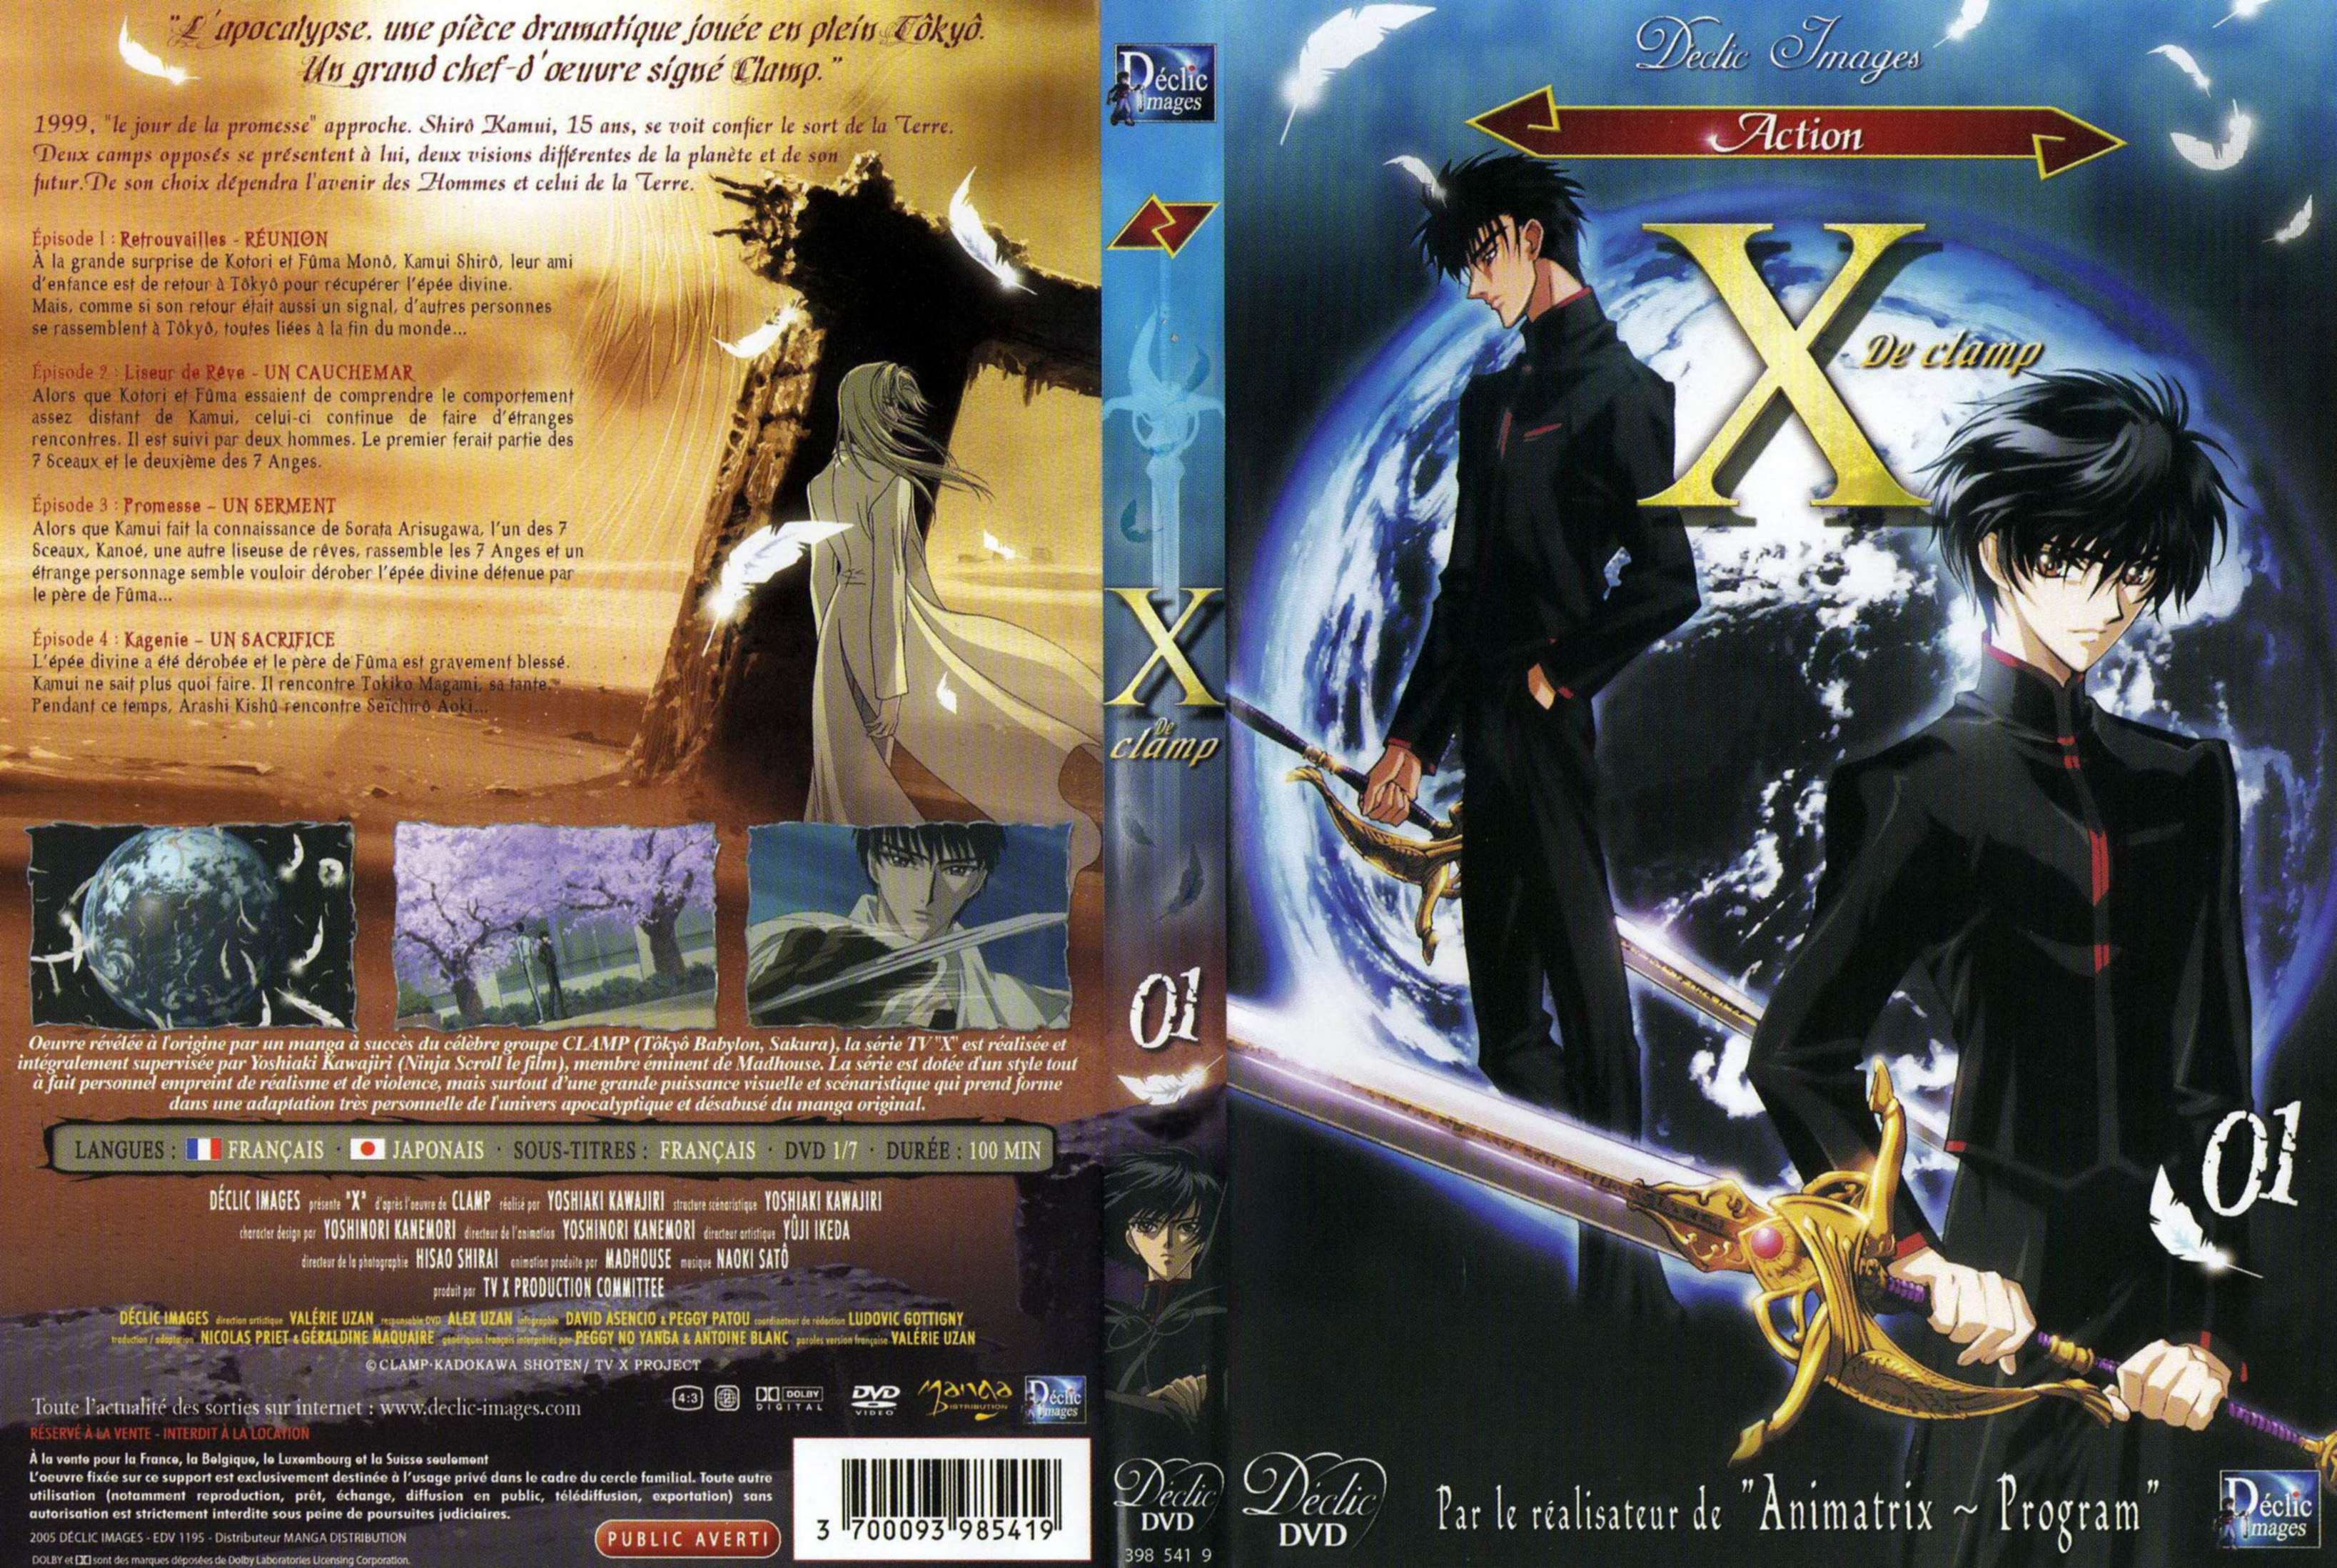 Jaquette DVD X de clamp vol 1